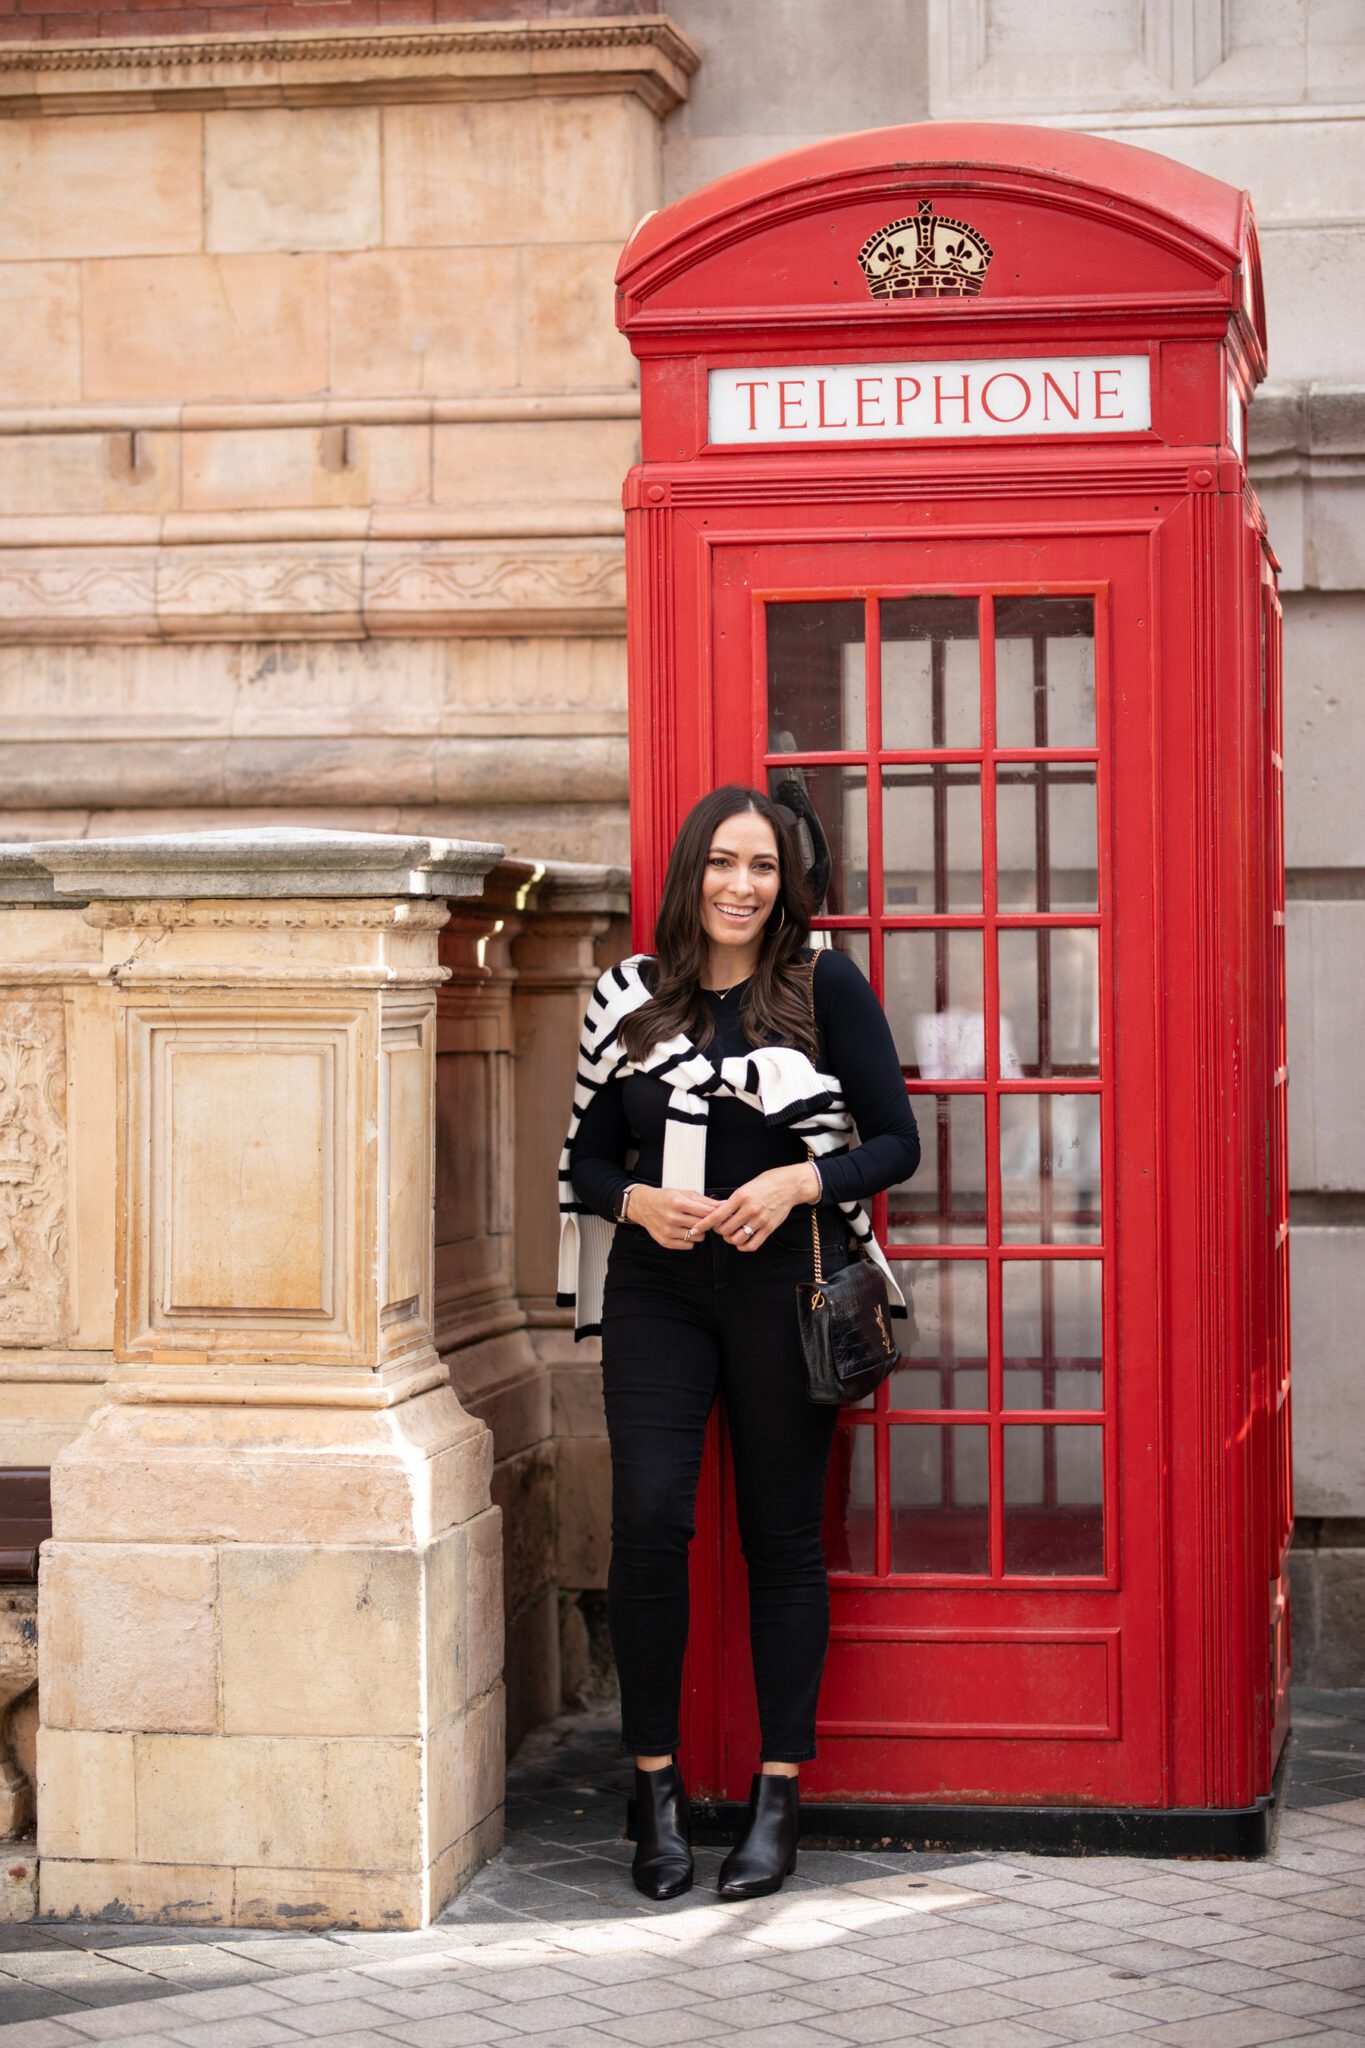 London Phonebooth photo spot